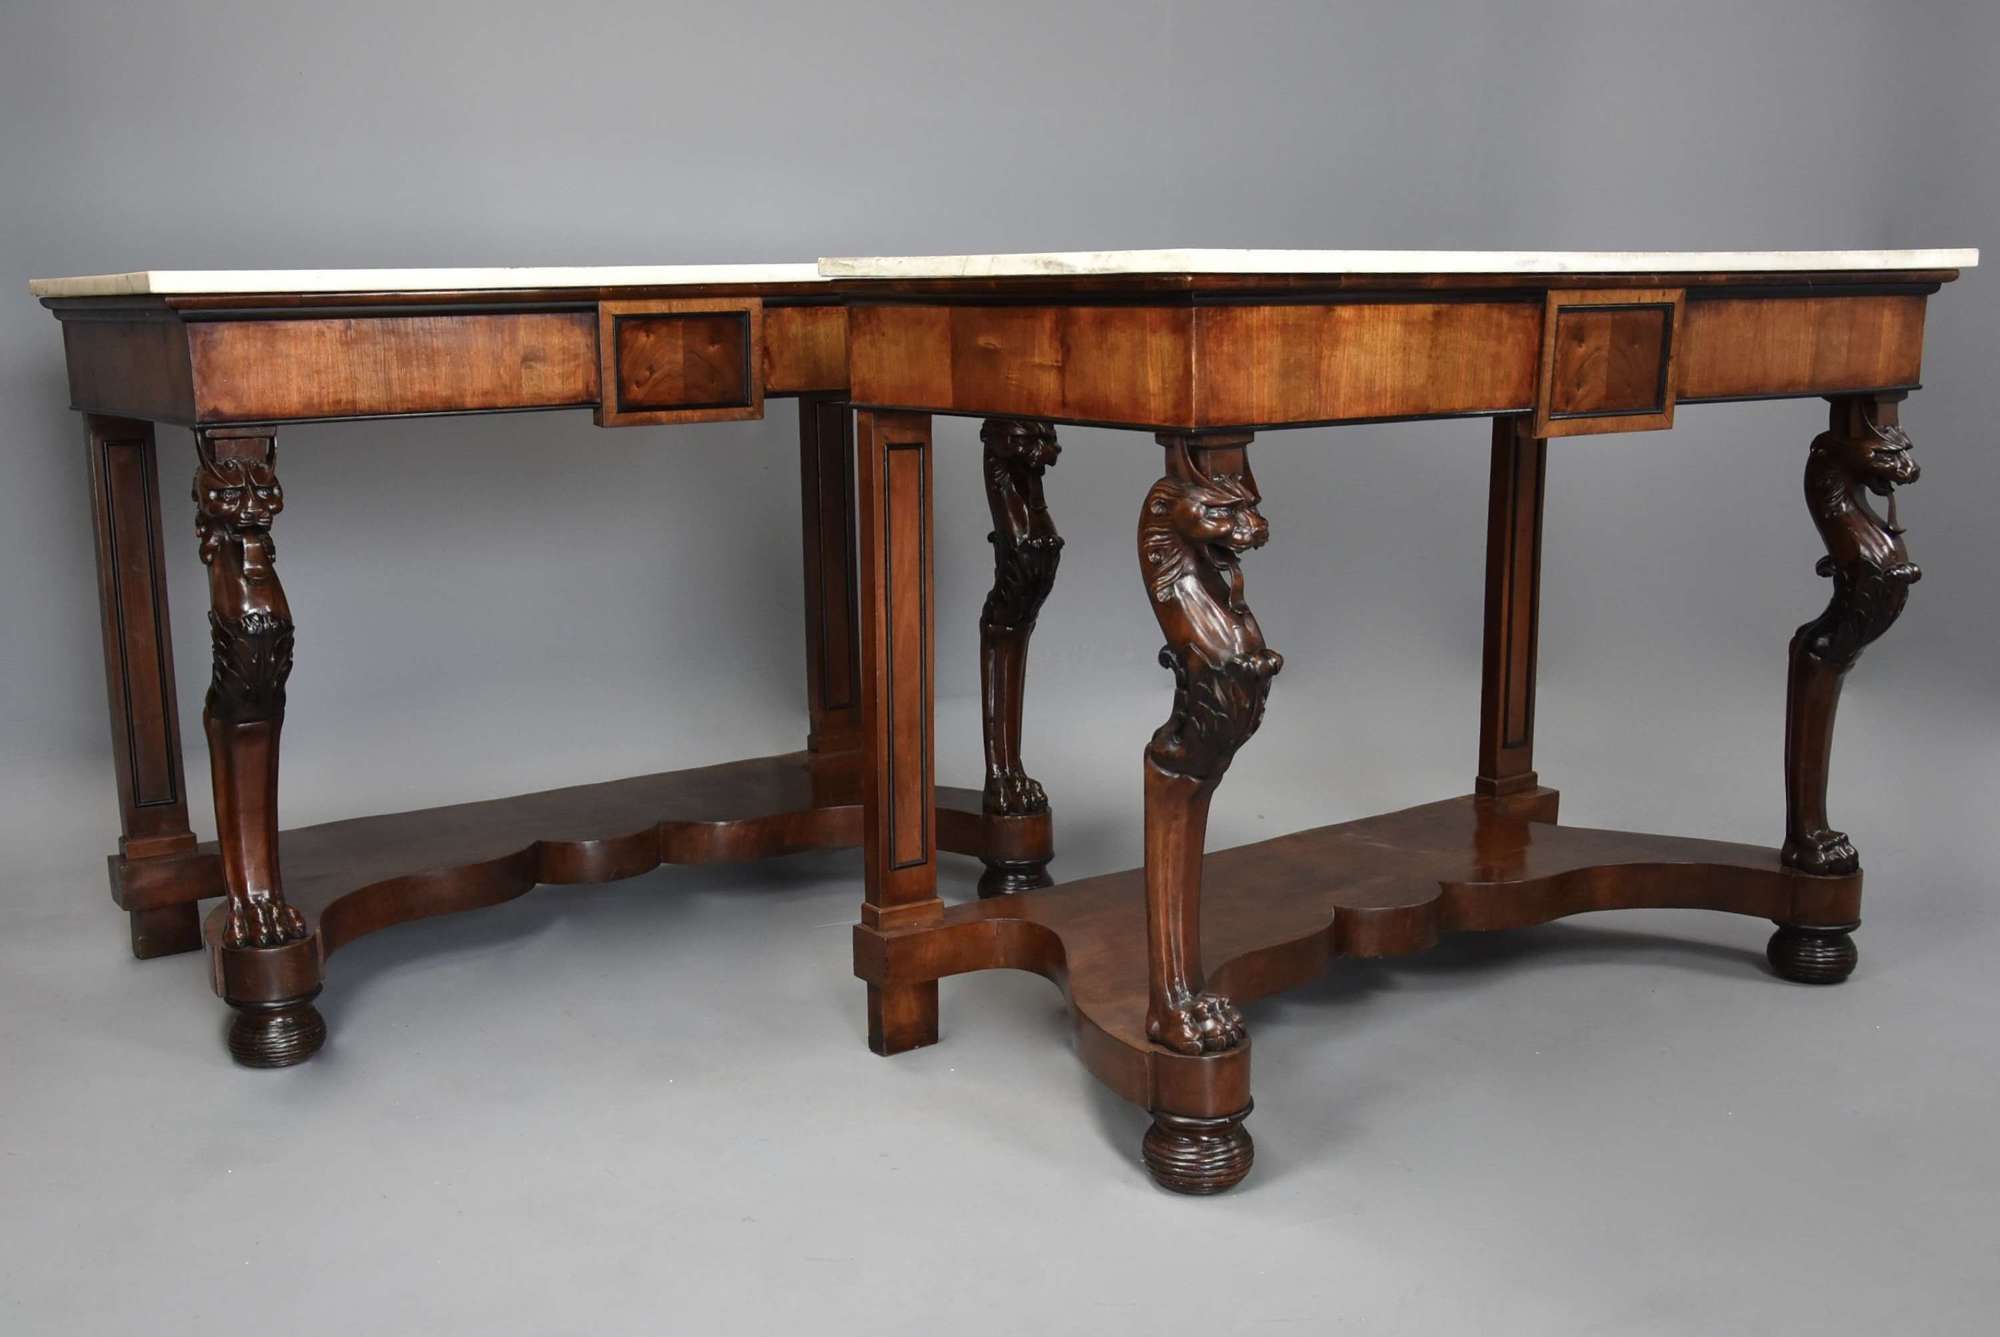 Rare pair of early 19th century Italian walnut console tables